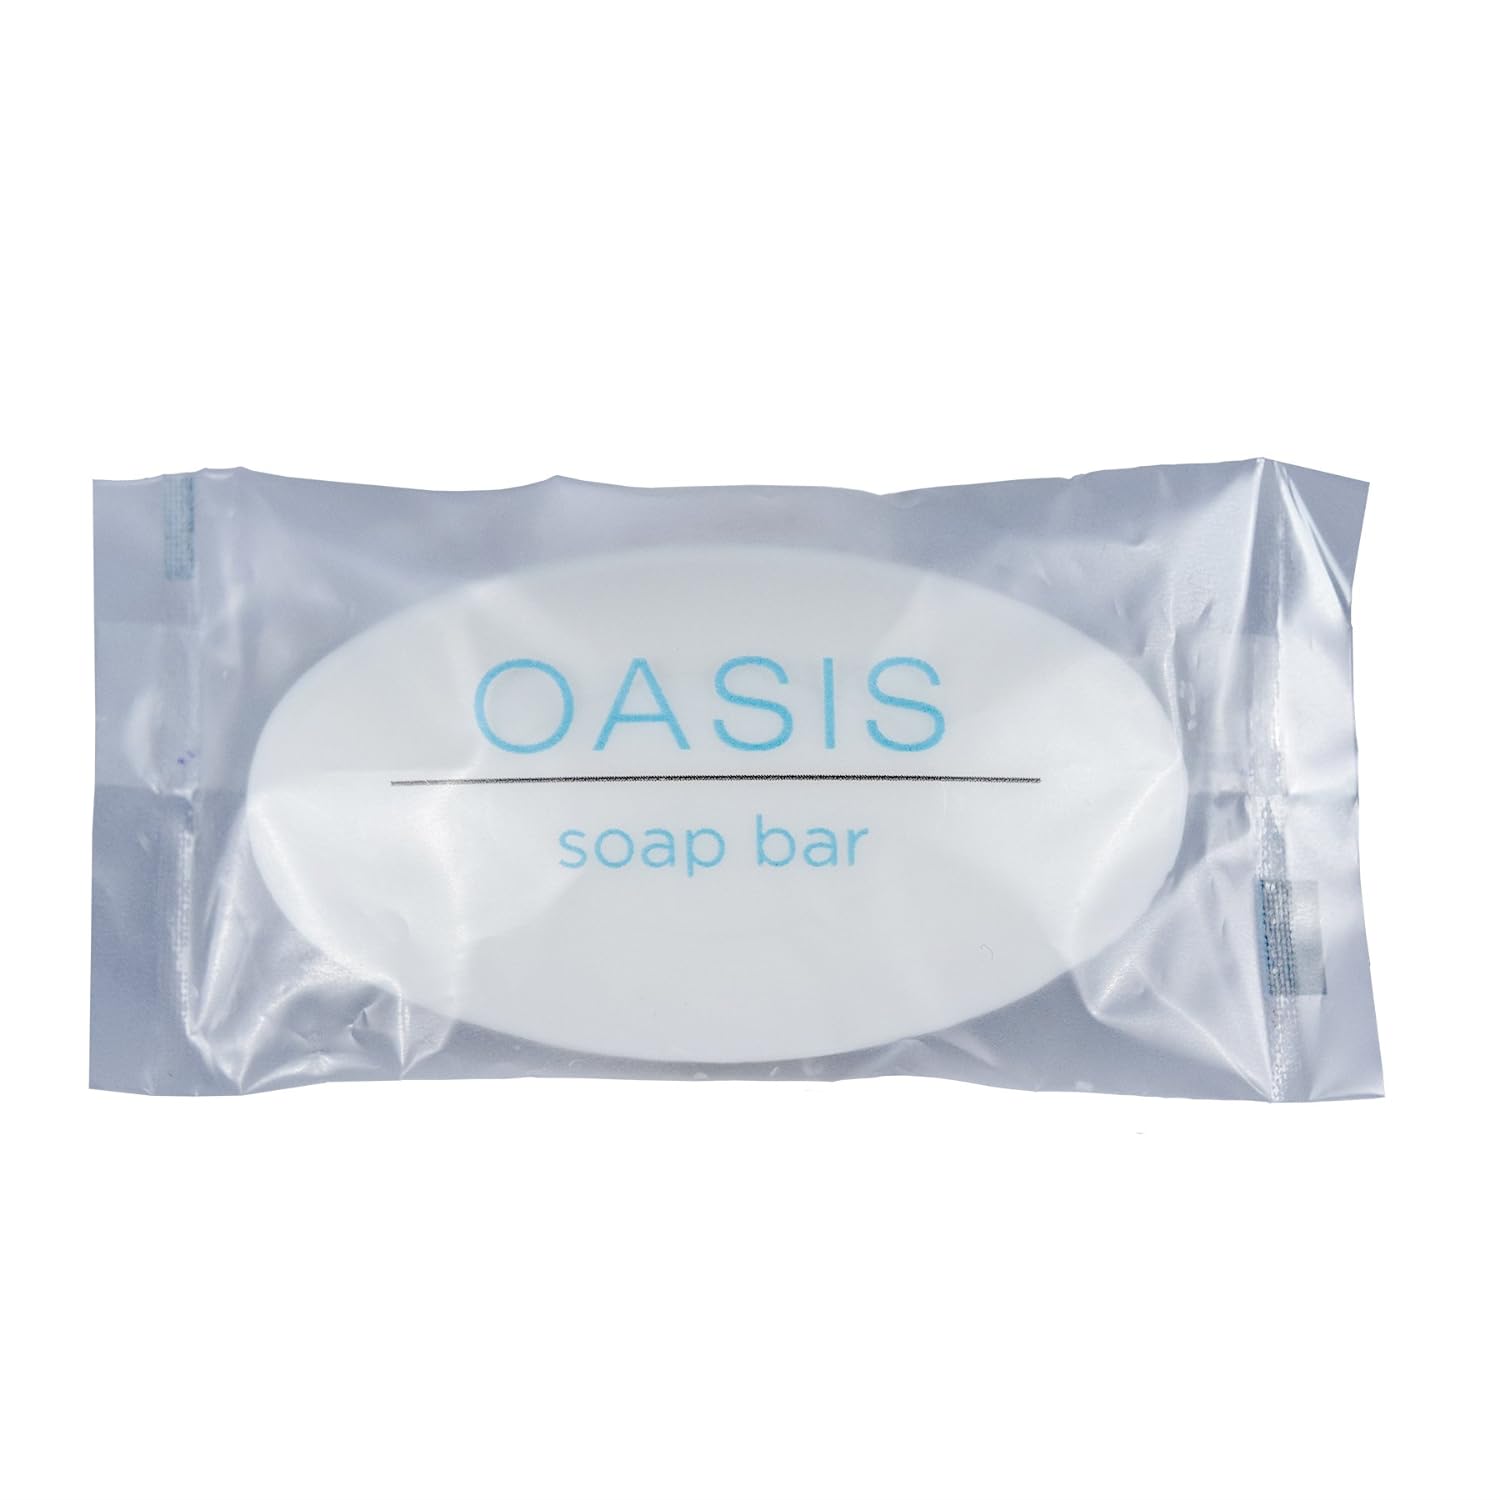 Esupli.com  Oasis 0.75 Facial Soap Bar for Hotels and Motels